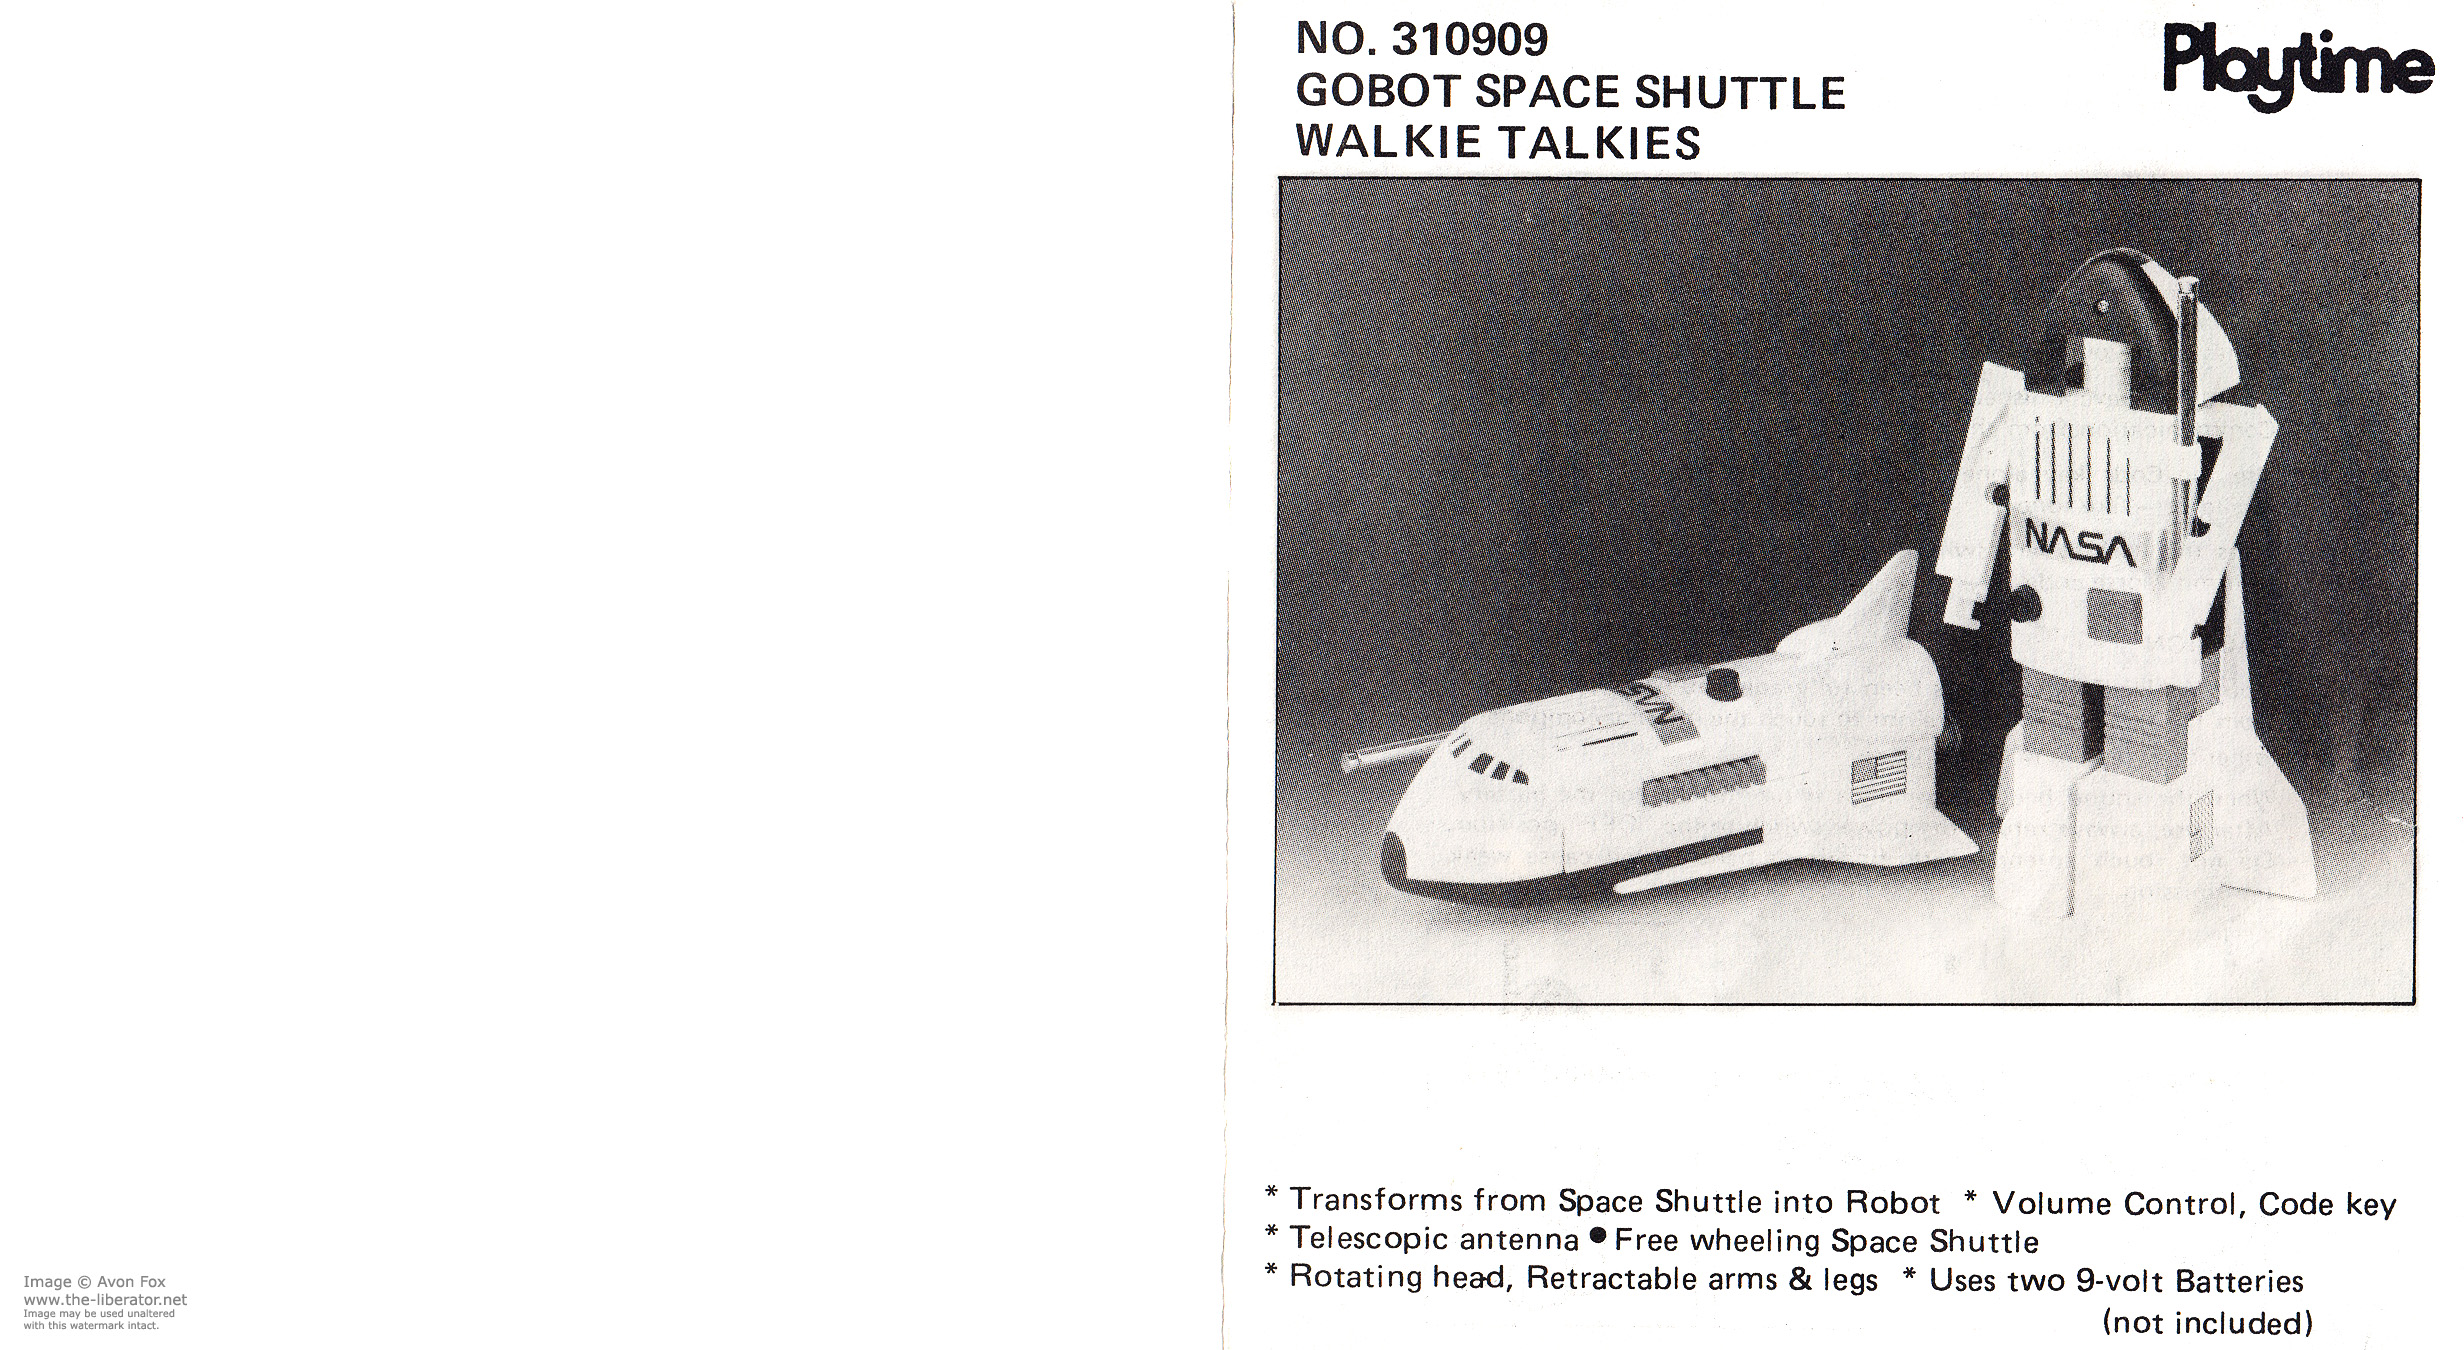 Spay-C Space Shuttle Walkie Talkies Gobots